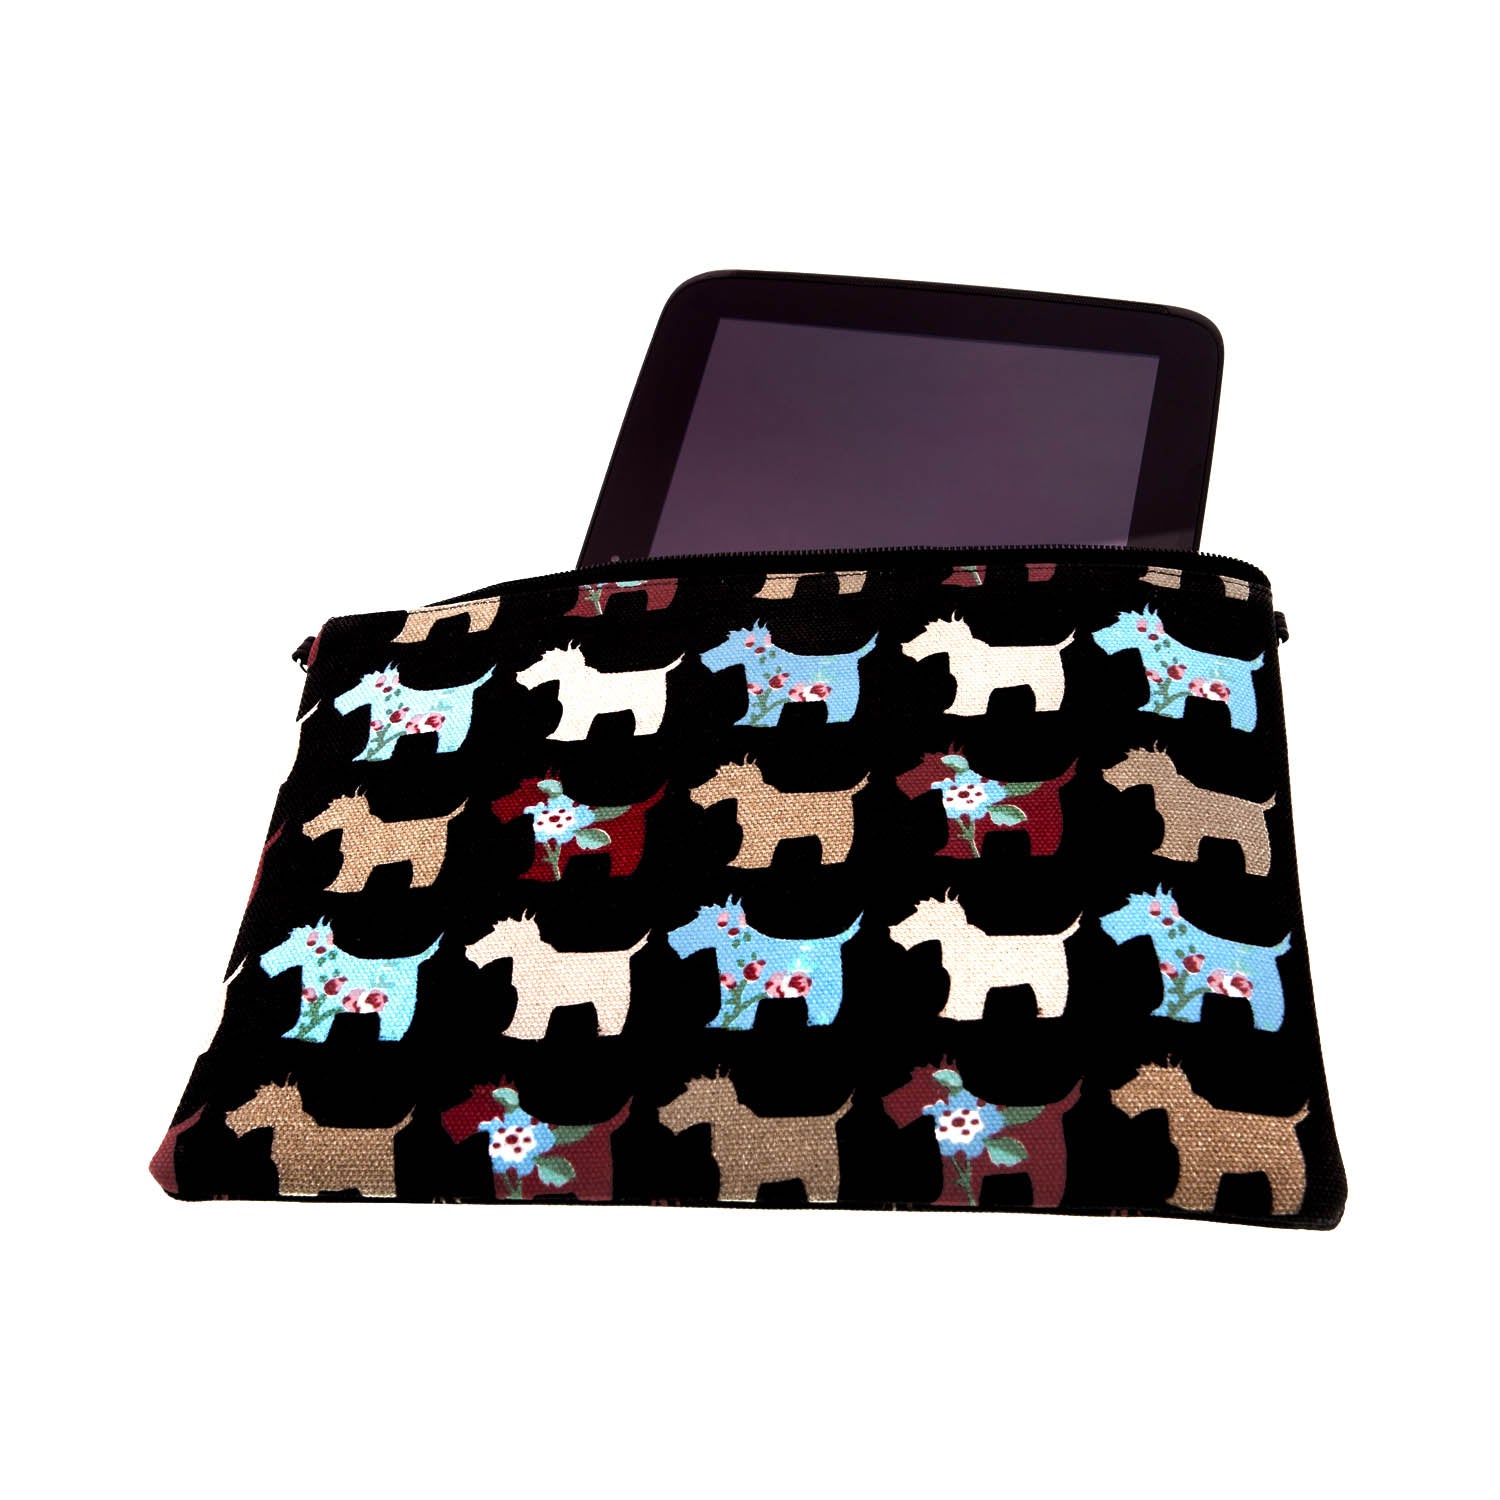 Dog Krazy Gifts - Scottish Terrier Tablet Case, part of the Scottie Dog range available from DogKrazyGifts.co.uk